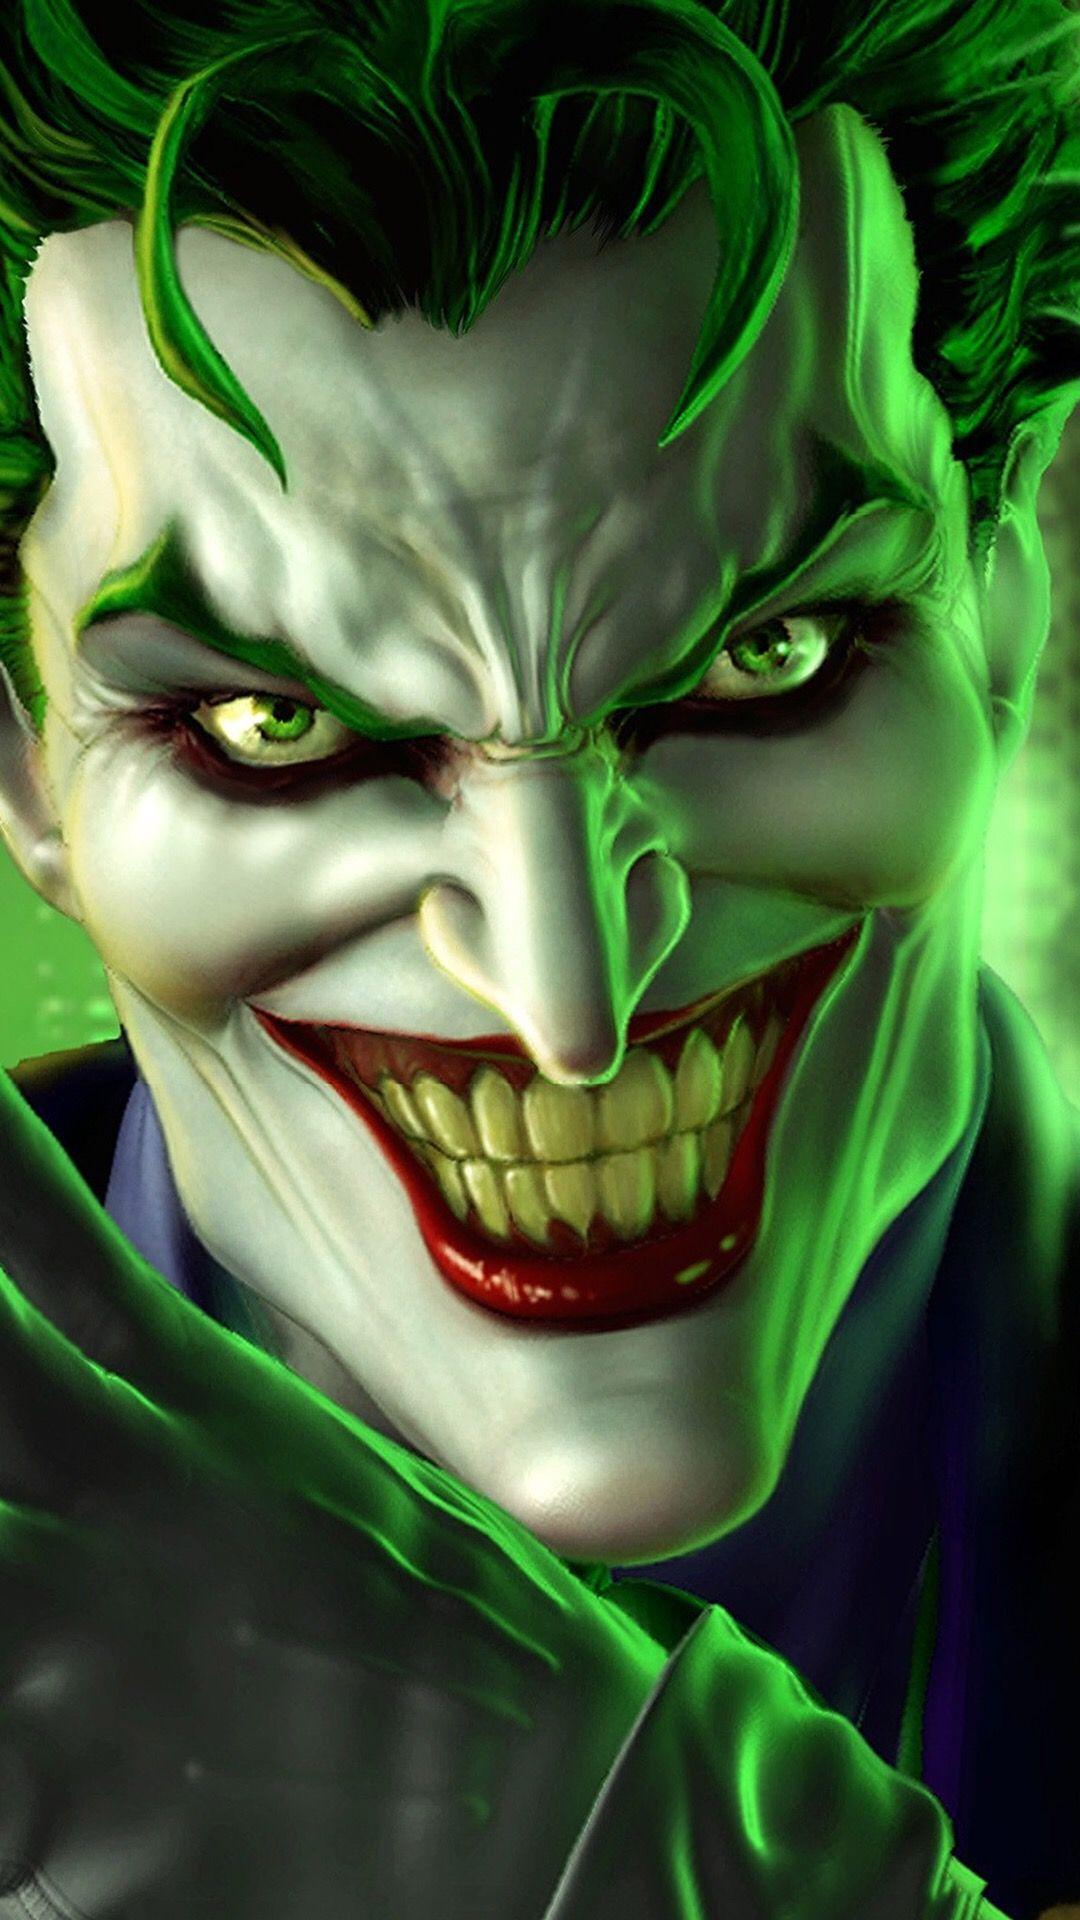 JOKER. Joker wallpaper, Batman joker